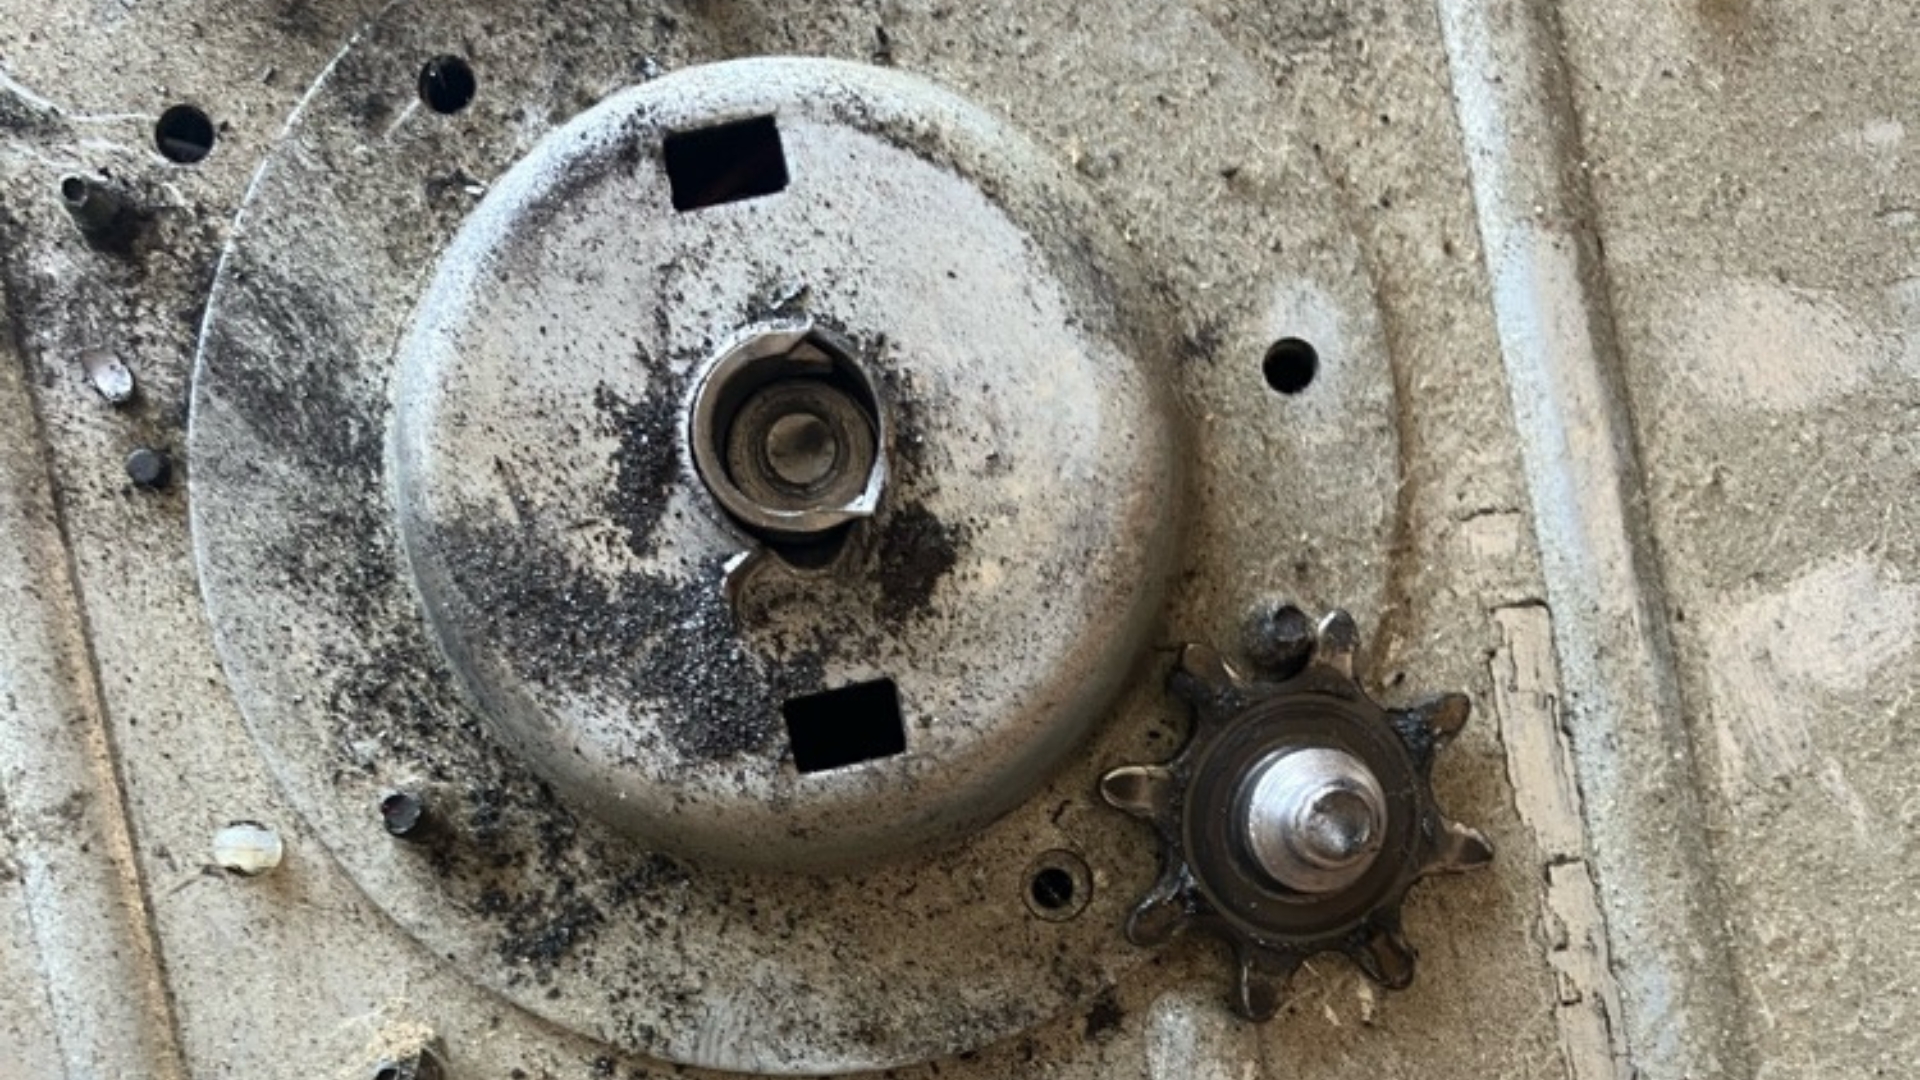 A broken garage door gear and sprocket